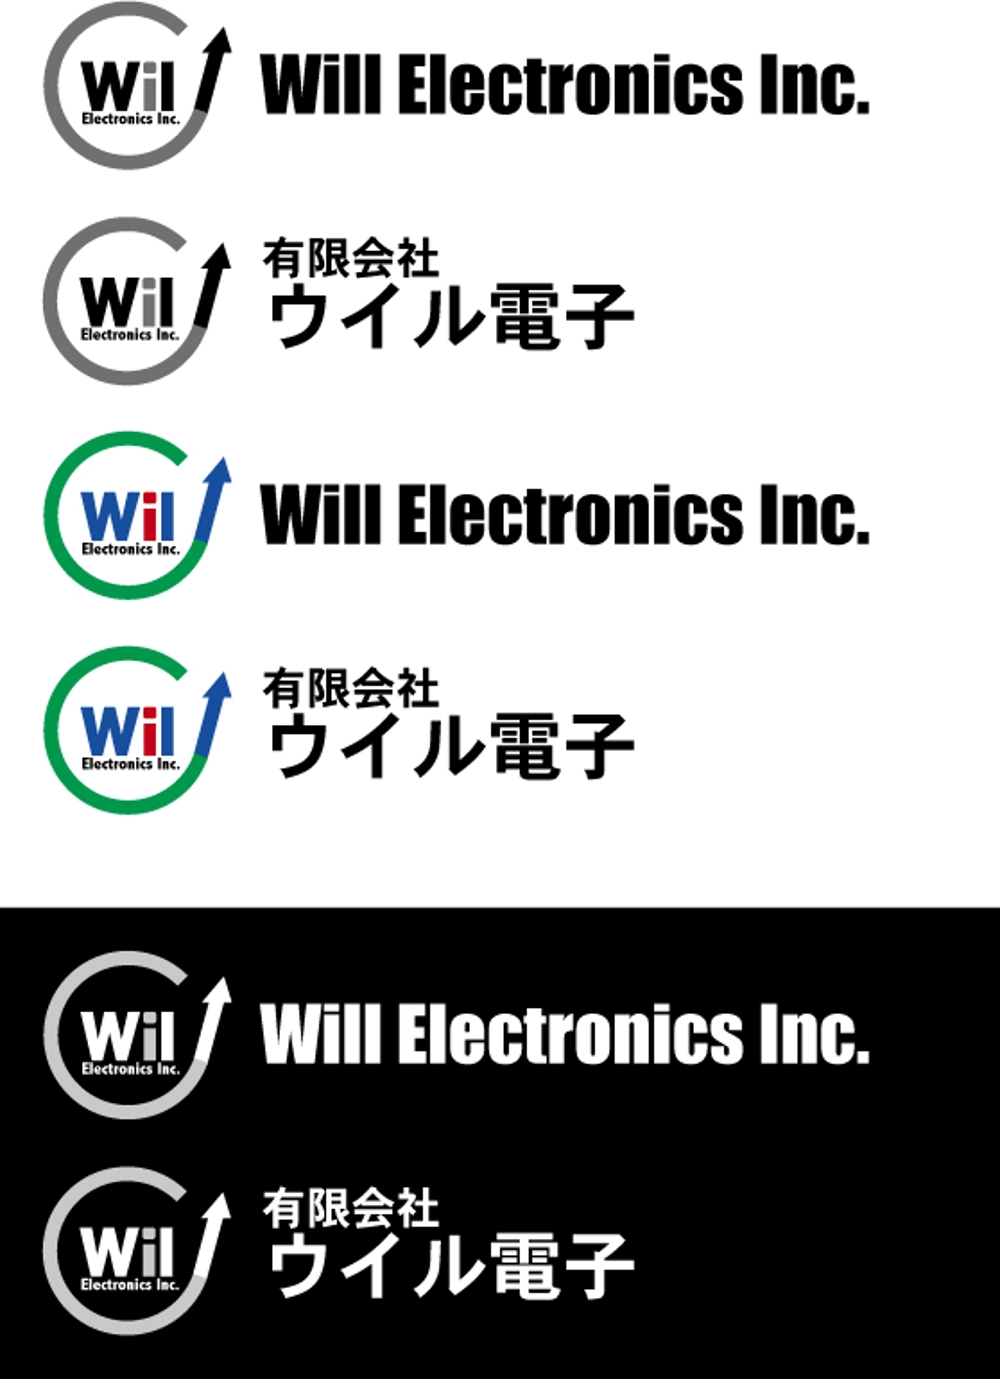 willelectronics.jpg